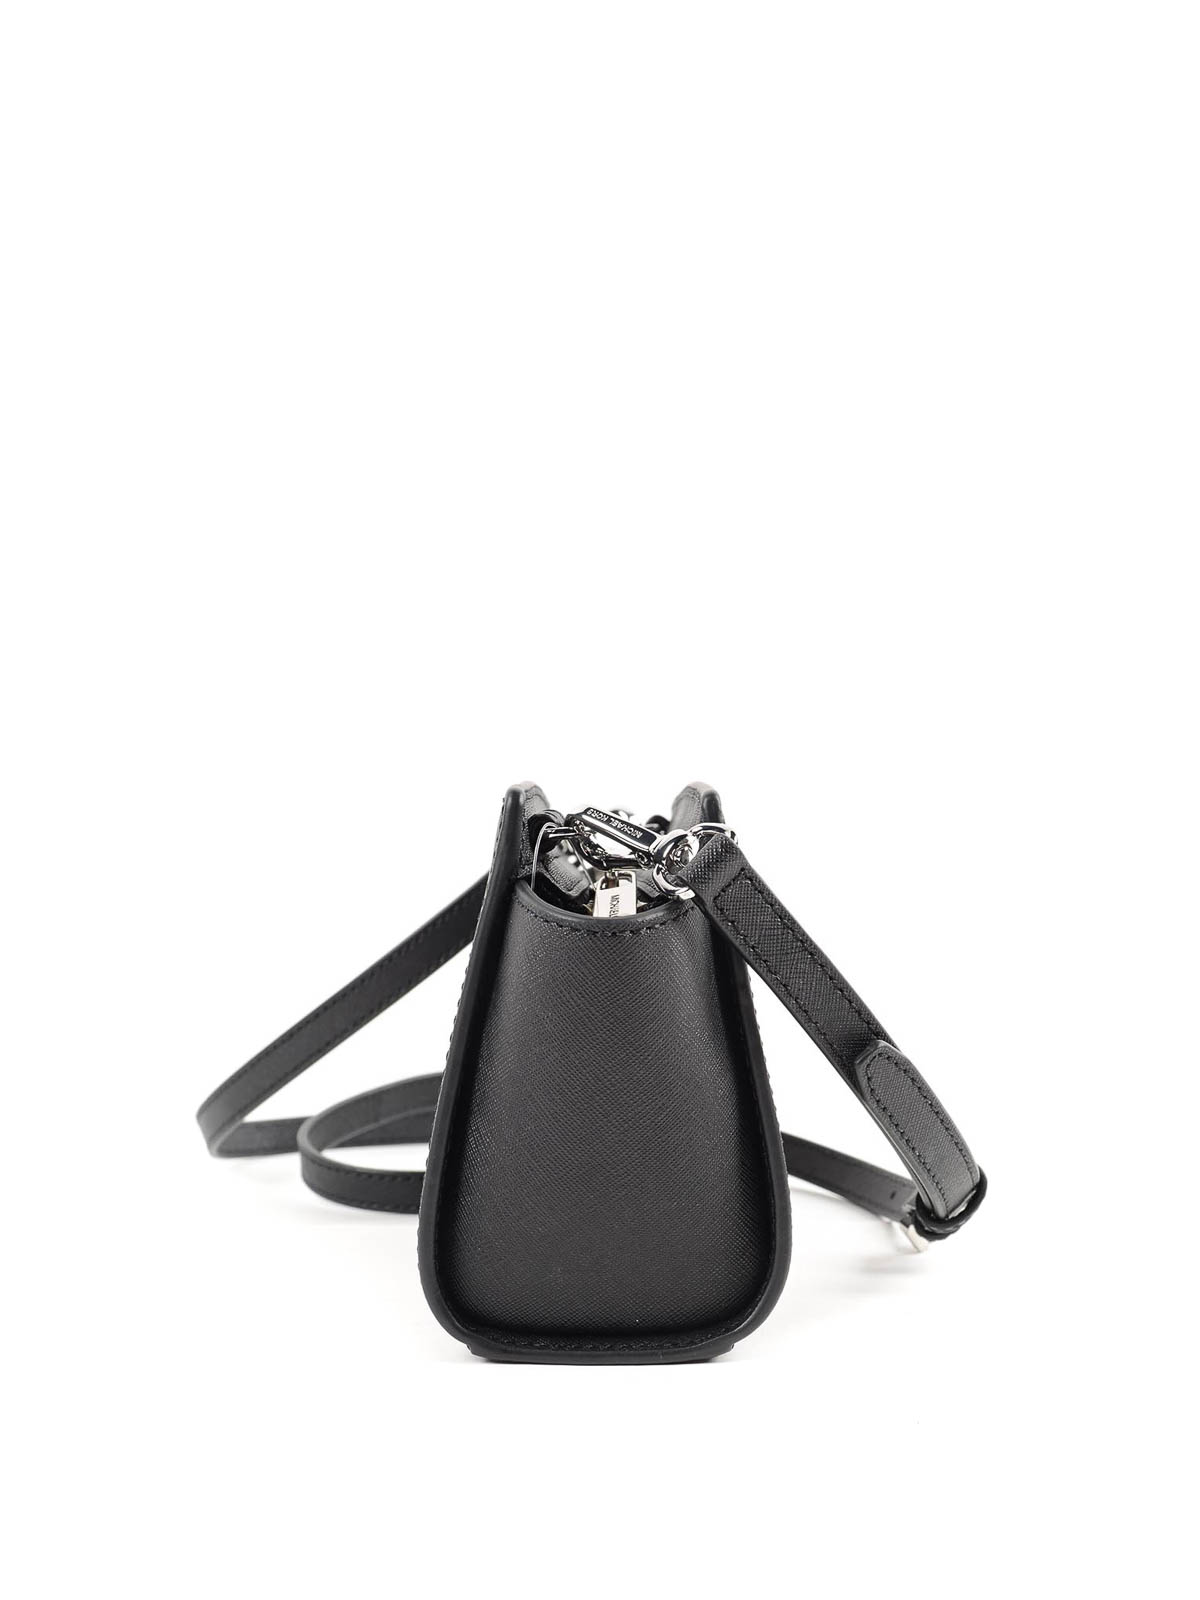 Michael Kors Selma Mini Leather Crossbody Bag